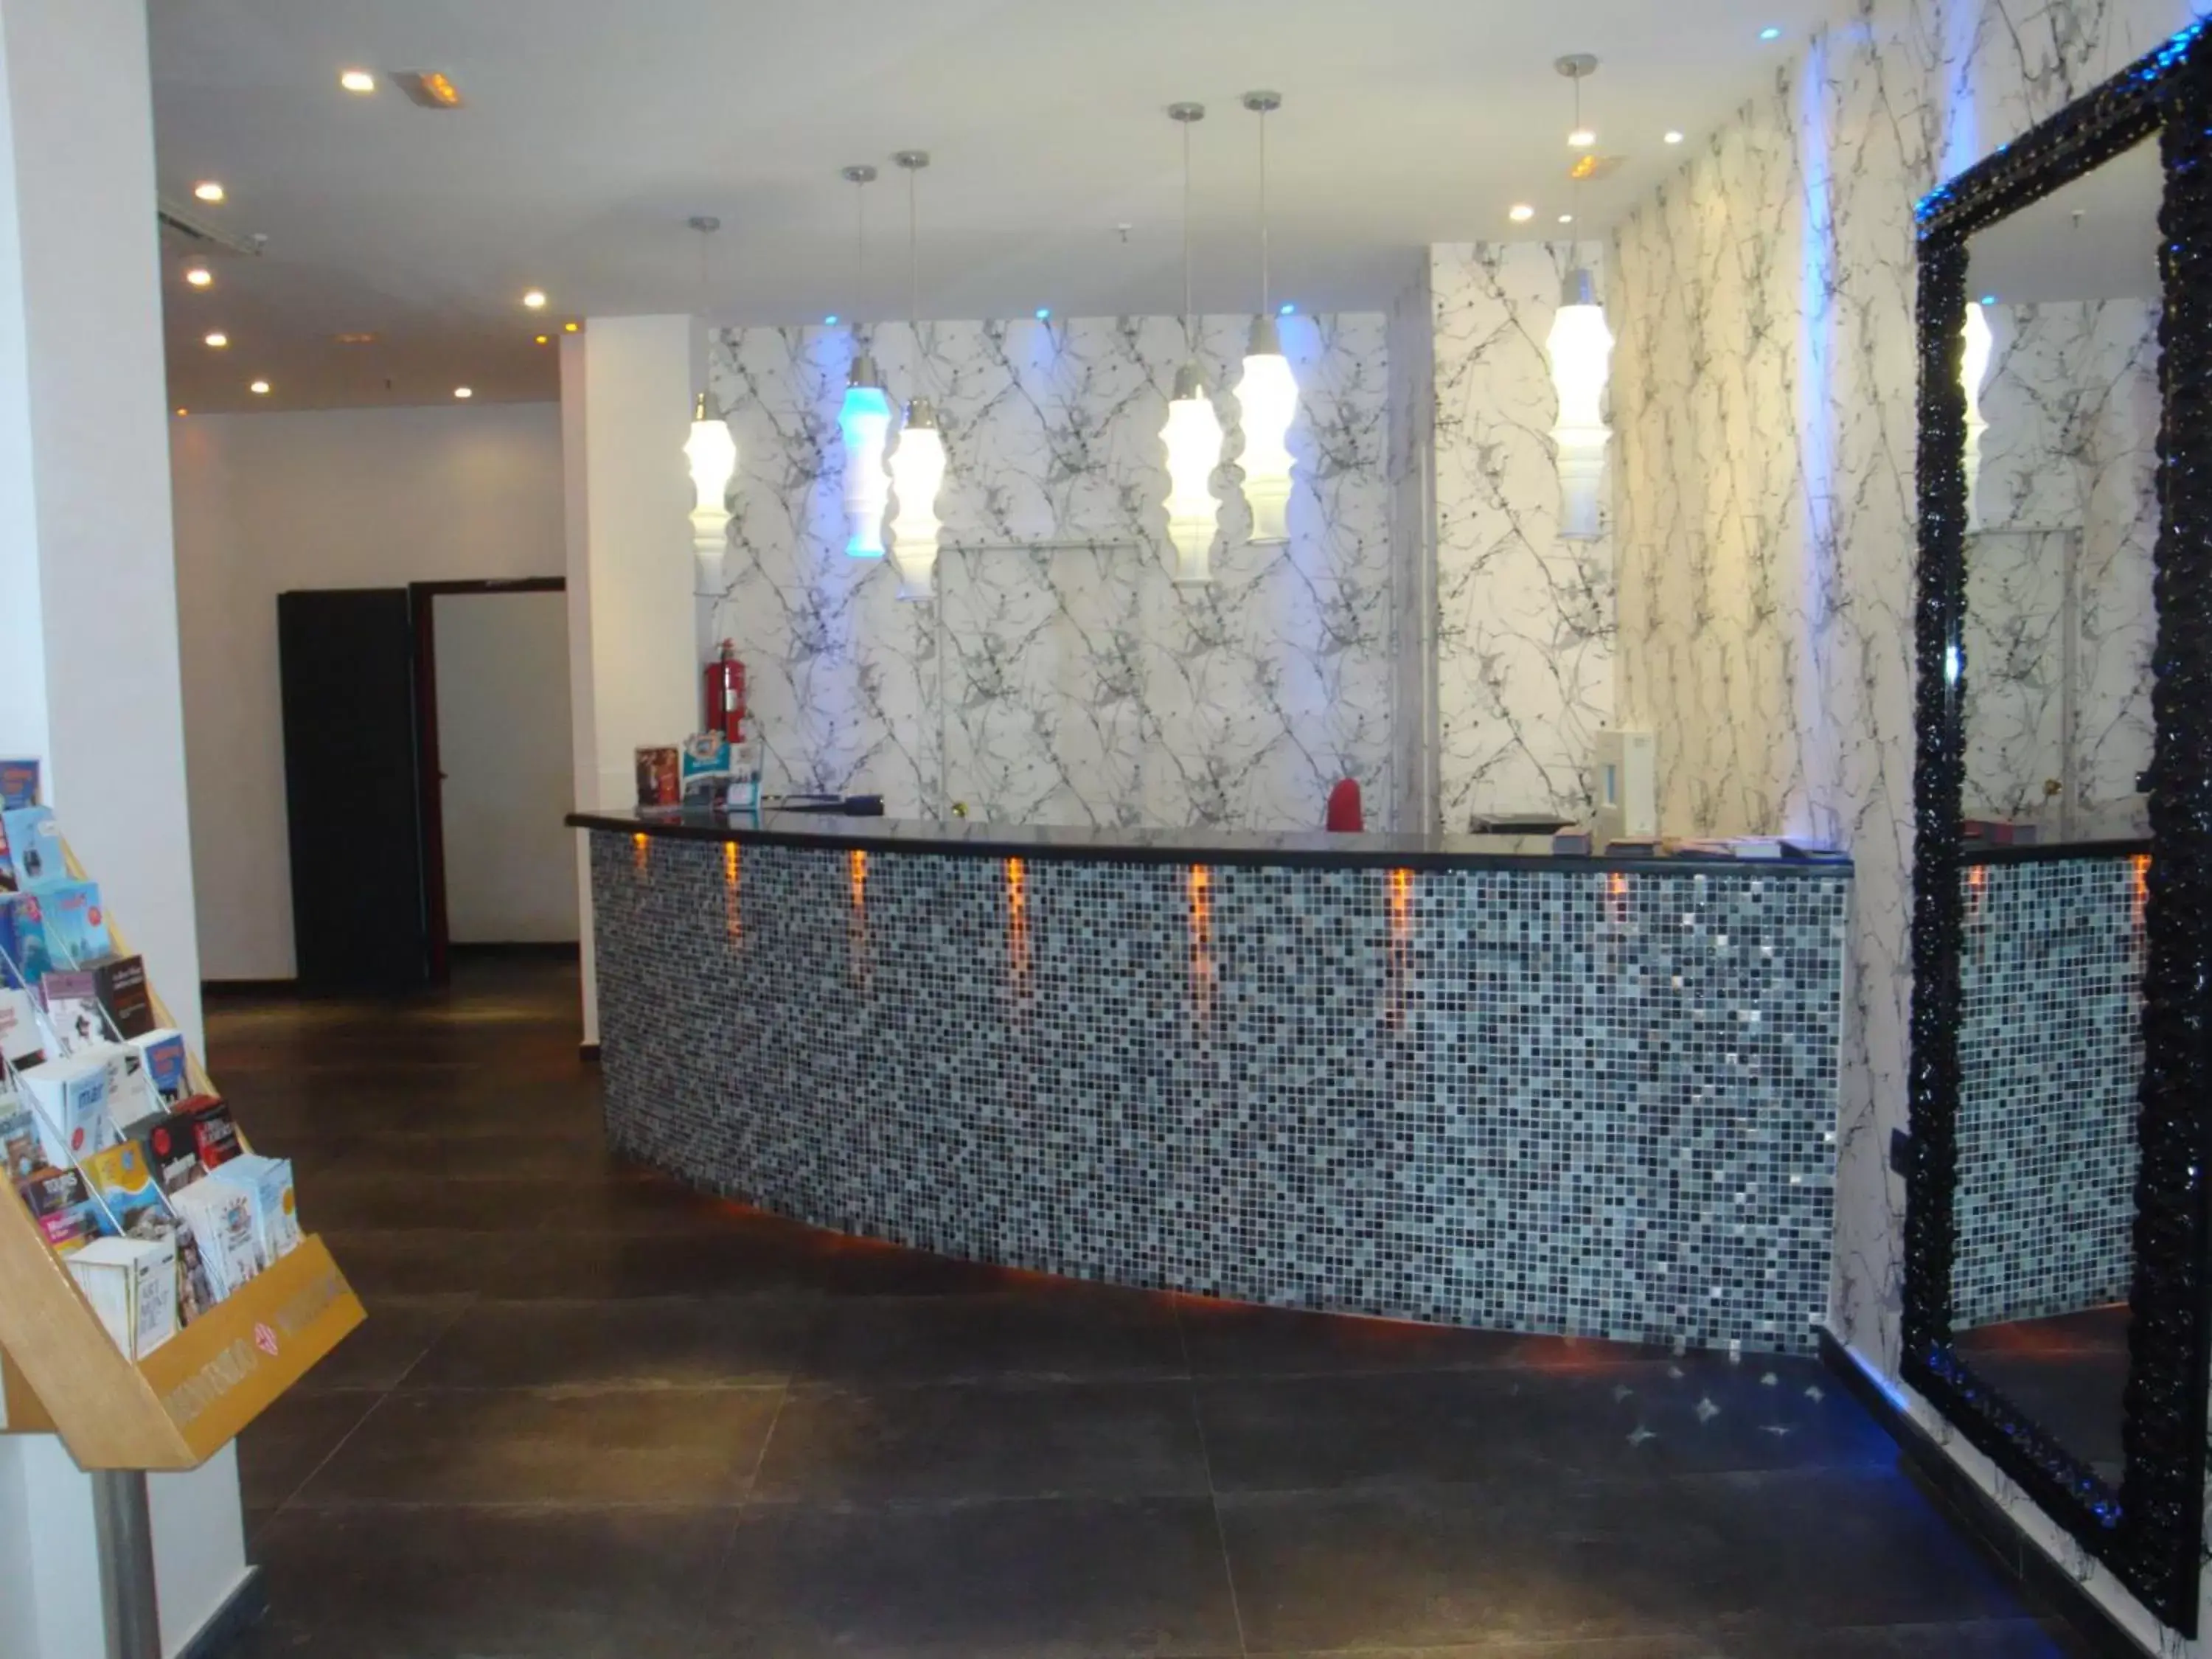 Lobby or reception in Hotel California